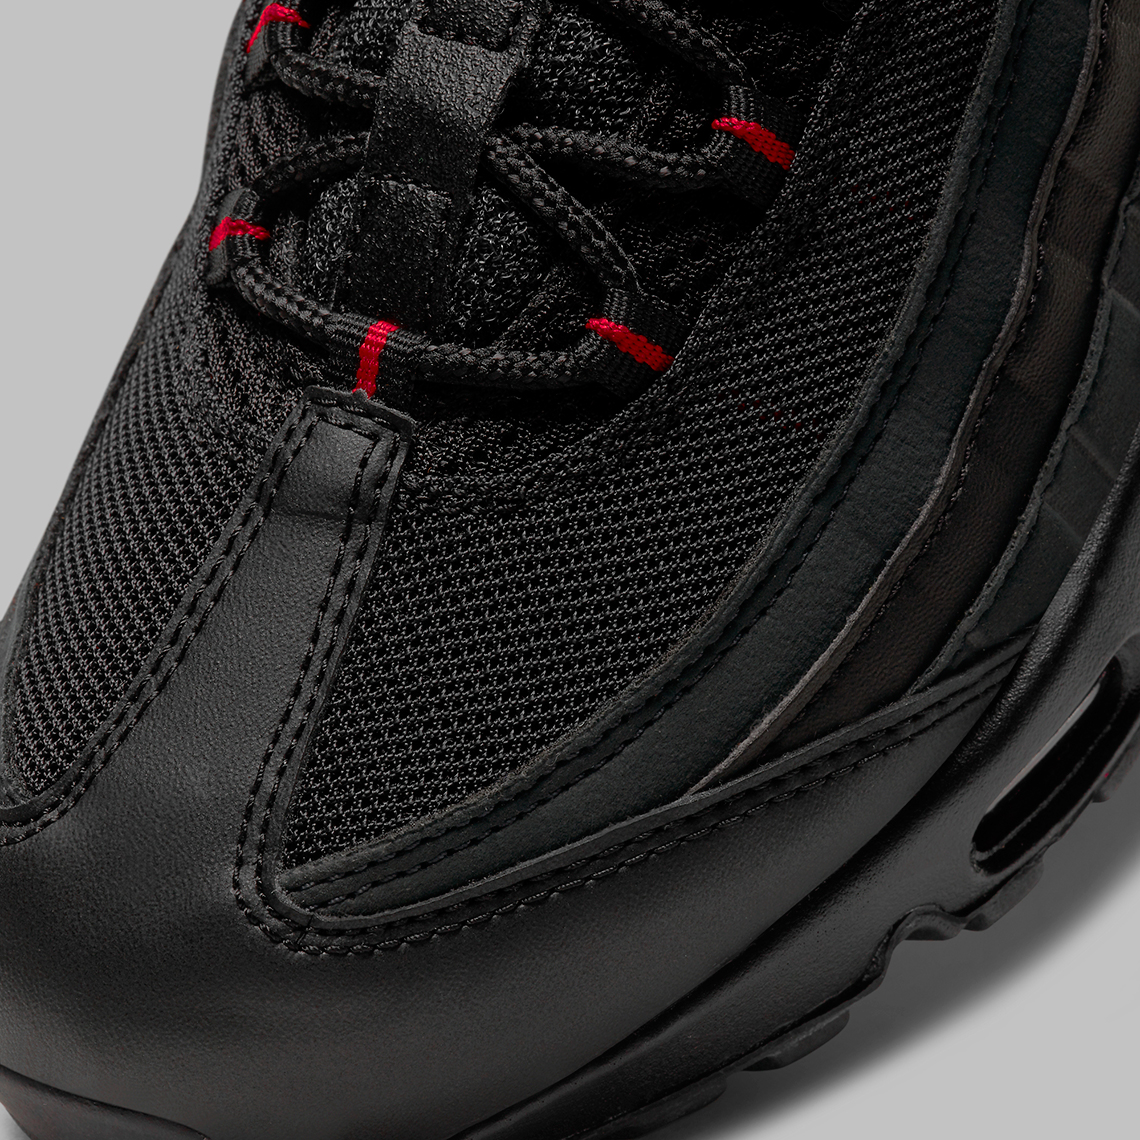 Nike Air Max 95 Black Reflective Dd7114 001 5